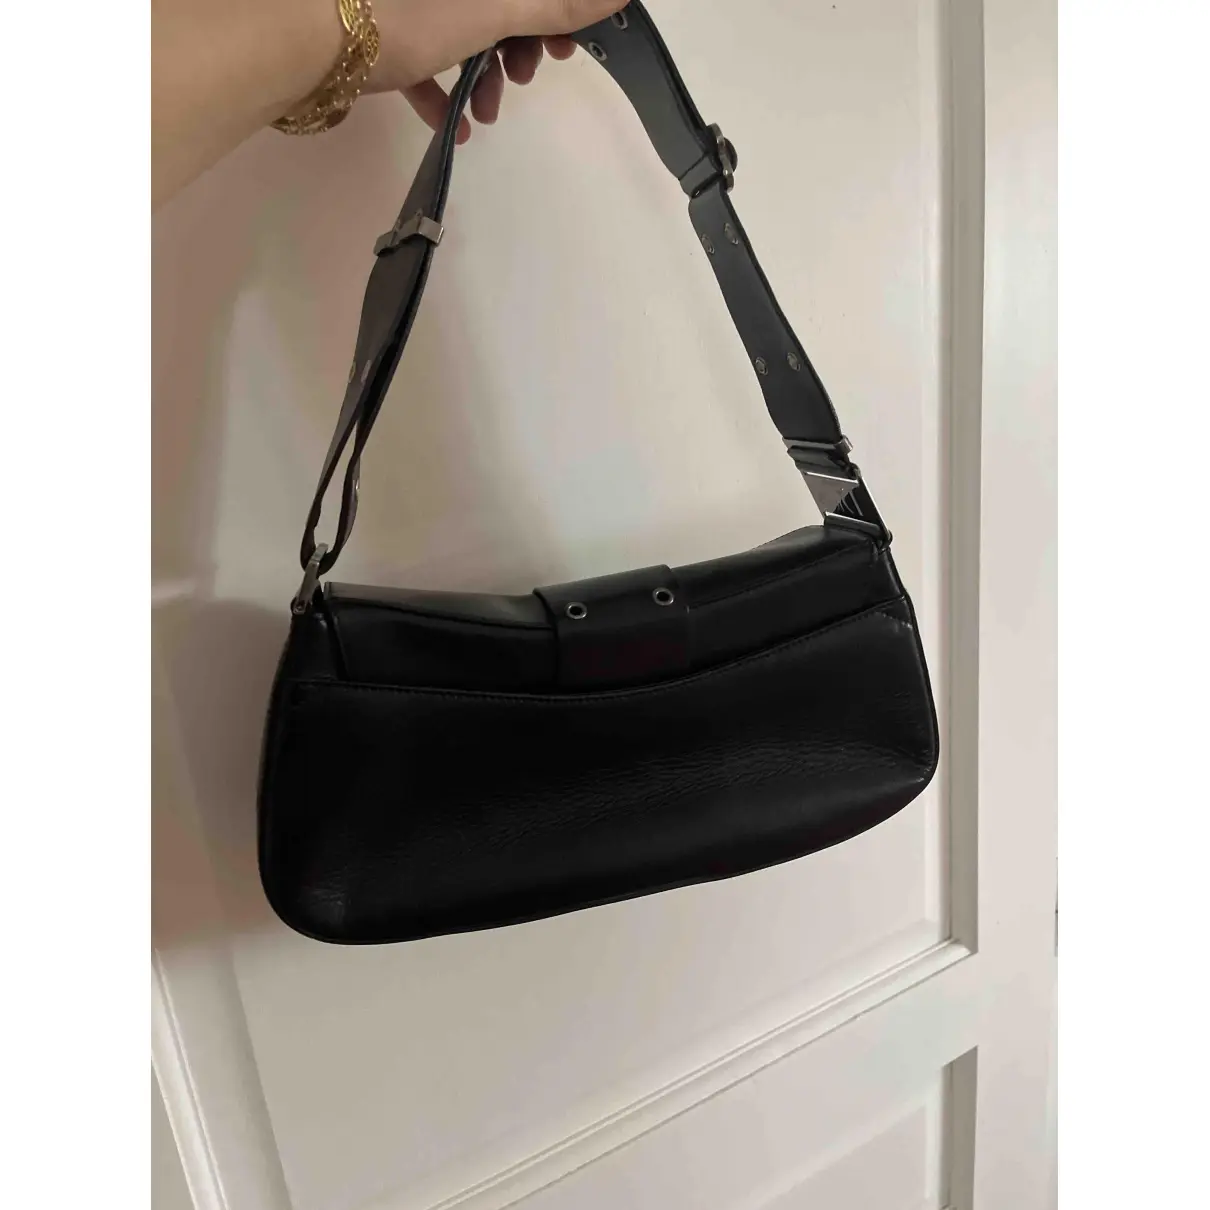 Buy Dior Columbus leather handbag online